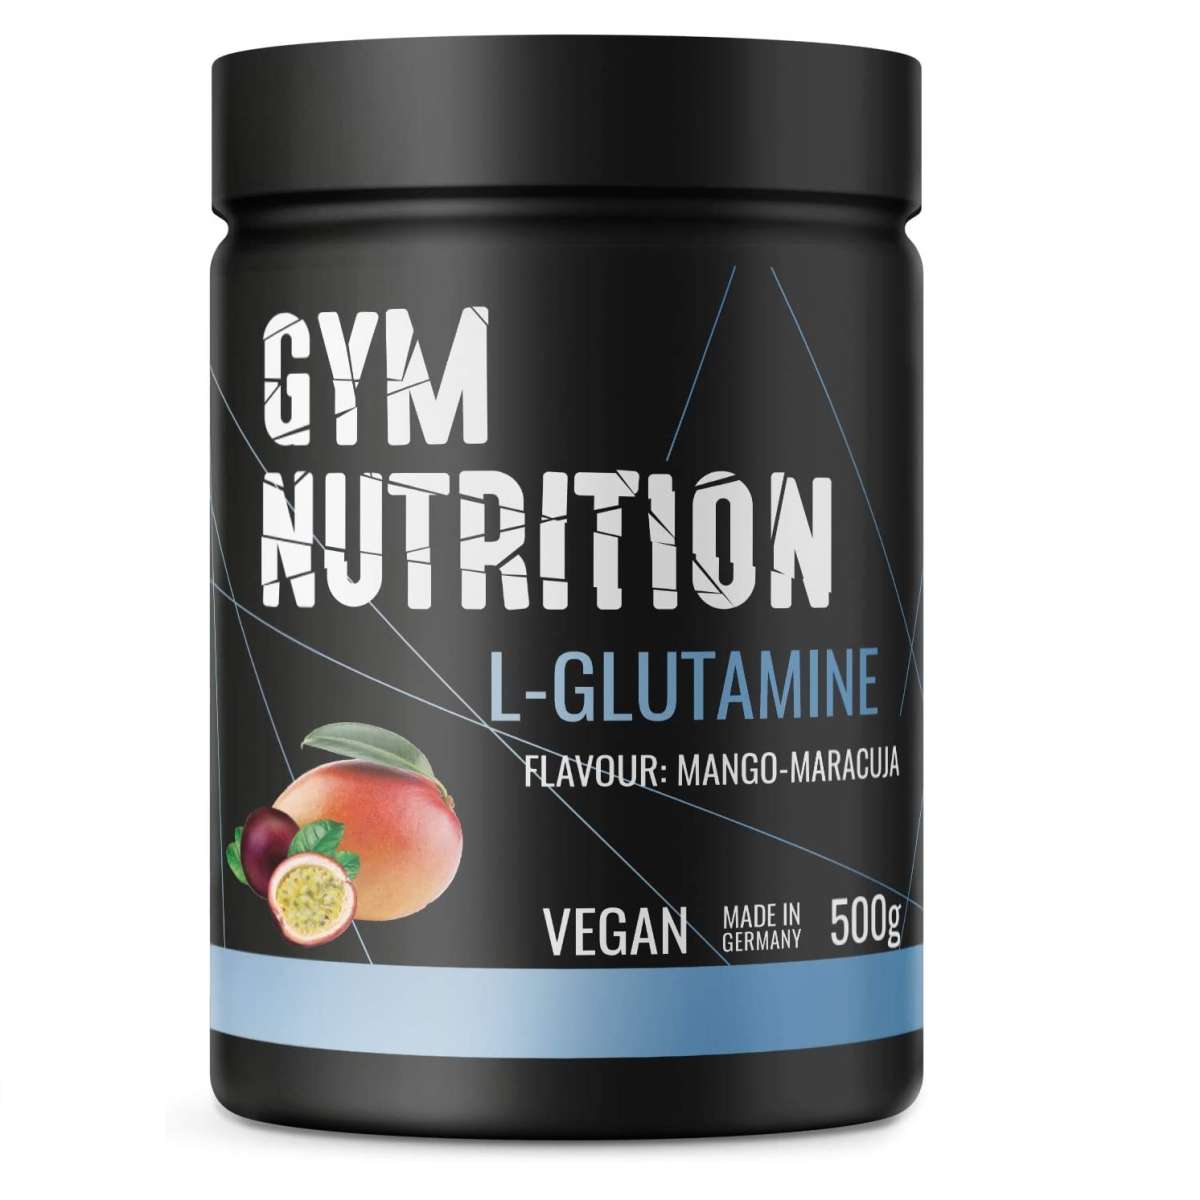 Gym Nutrition L-Glutamin Ultrapure - 500g Dose